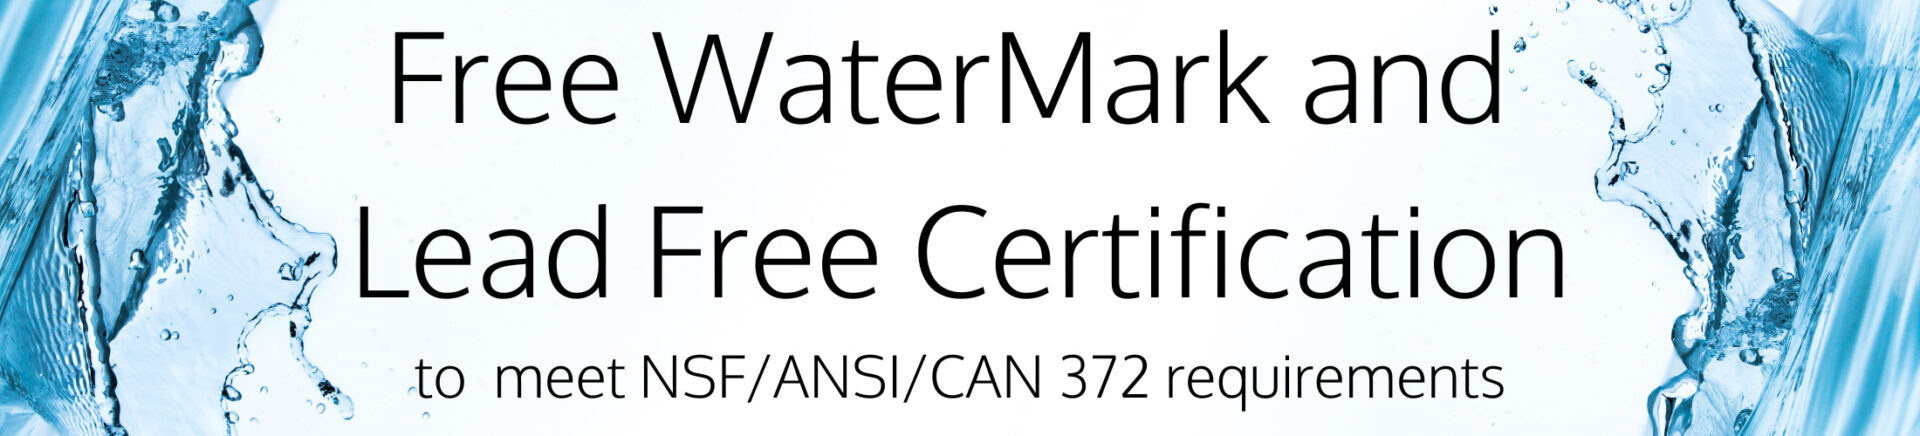 Free WaterMark Certification Banner (1)